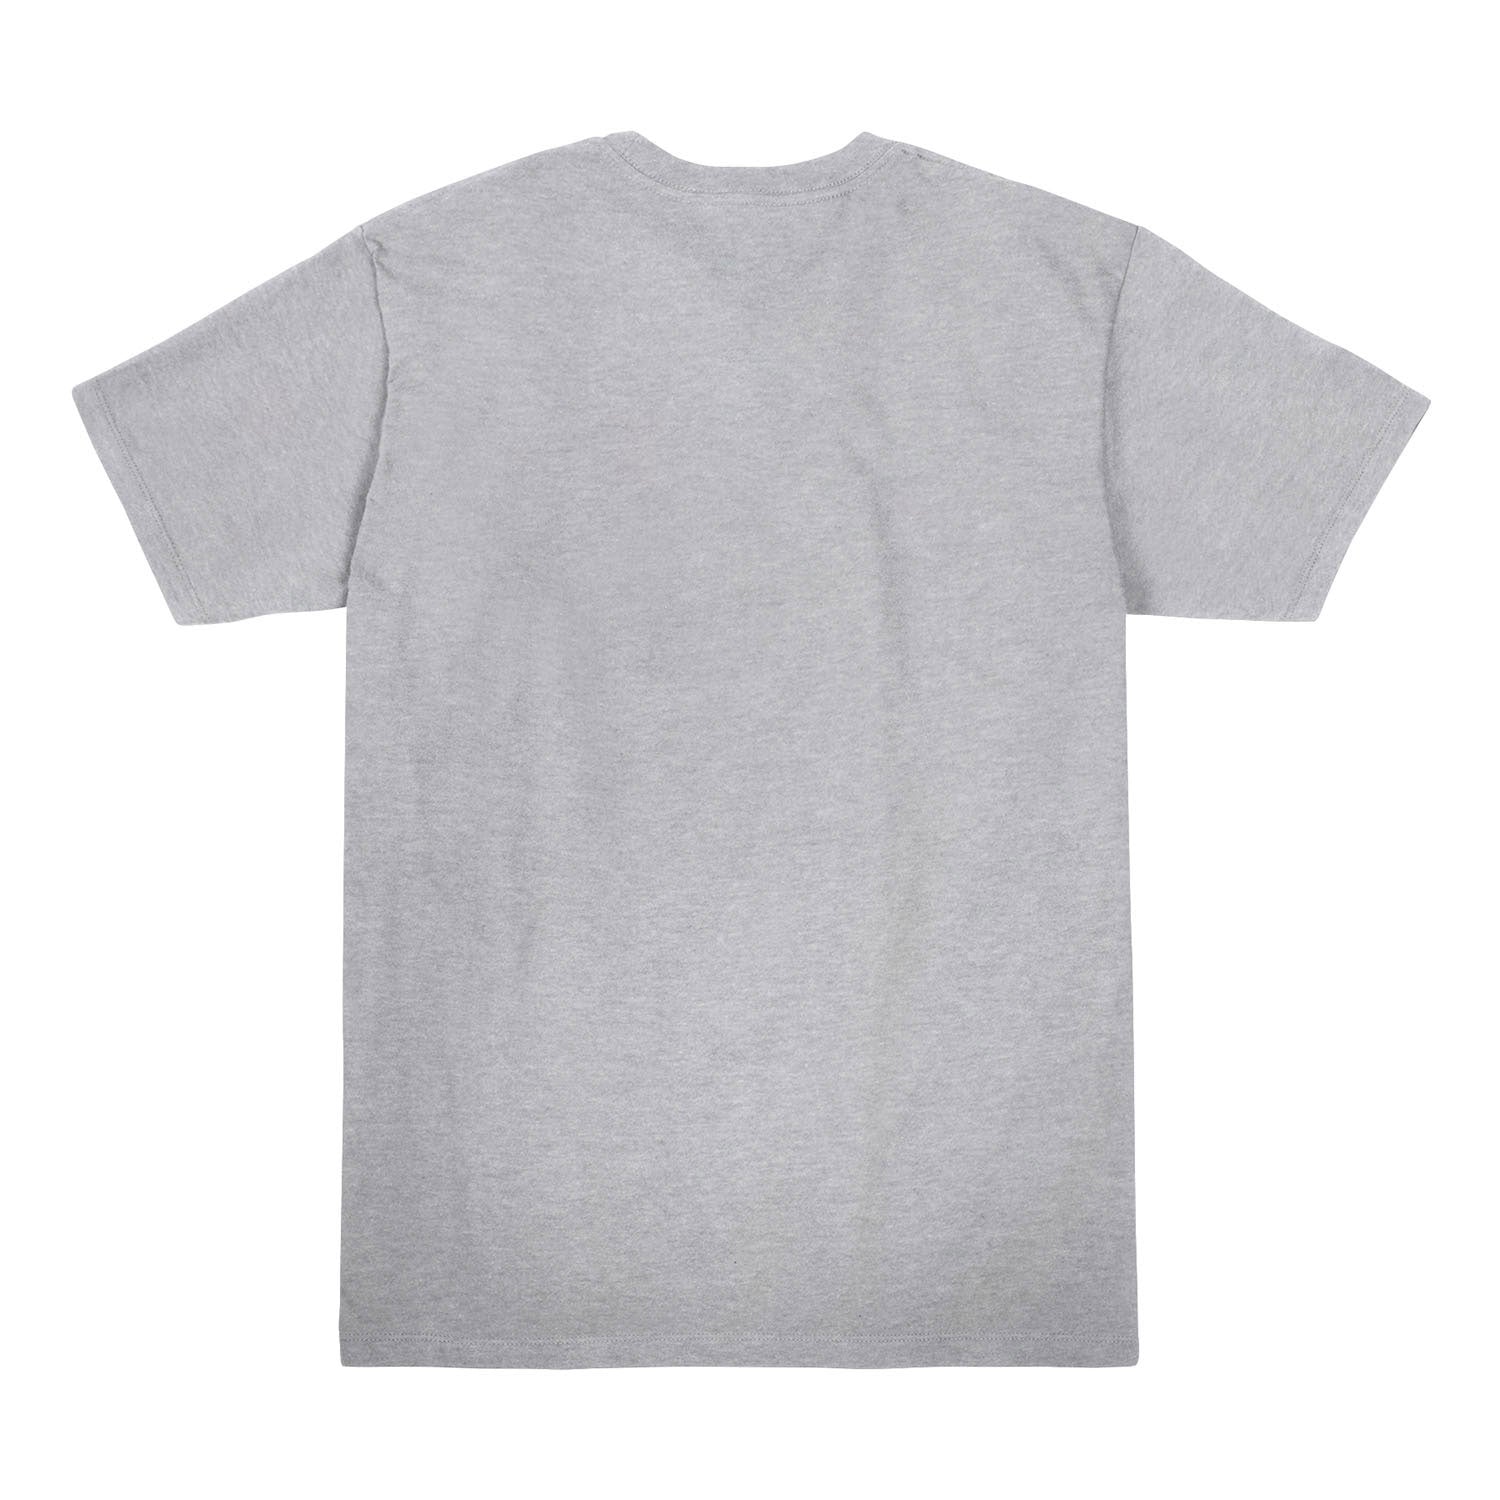 Call of Duty Alumnus Logo Grey T-Shirt - Back View